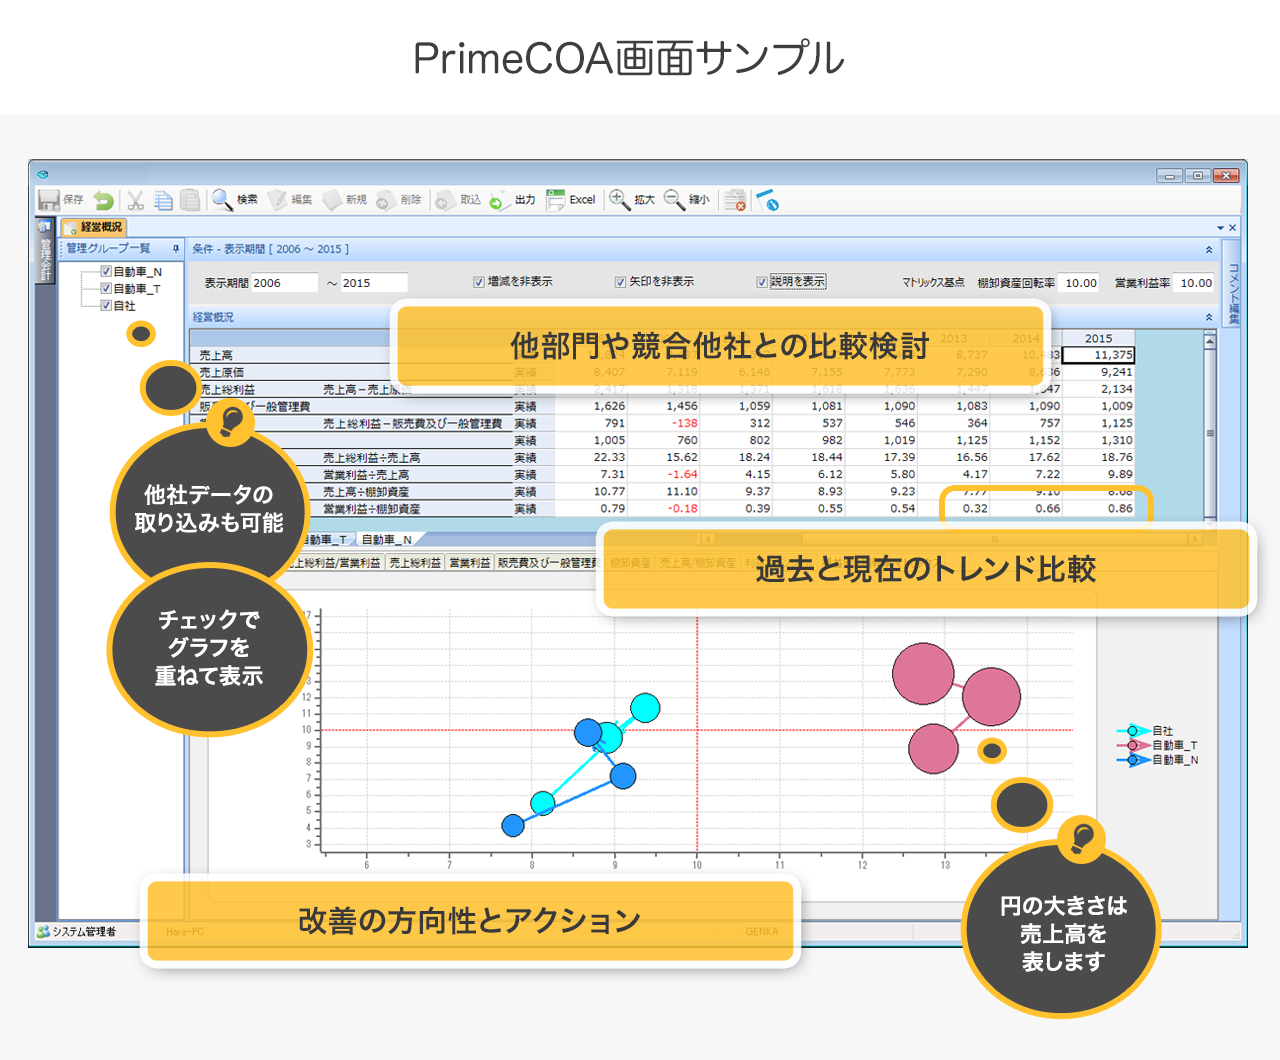 PrimeCOA画面サンプル